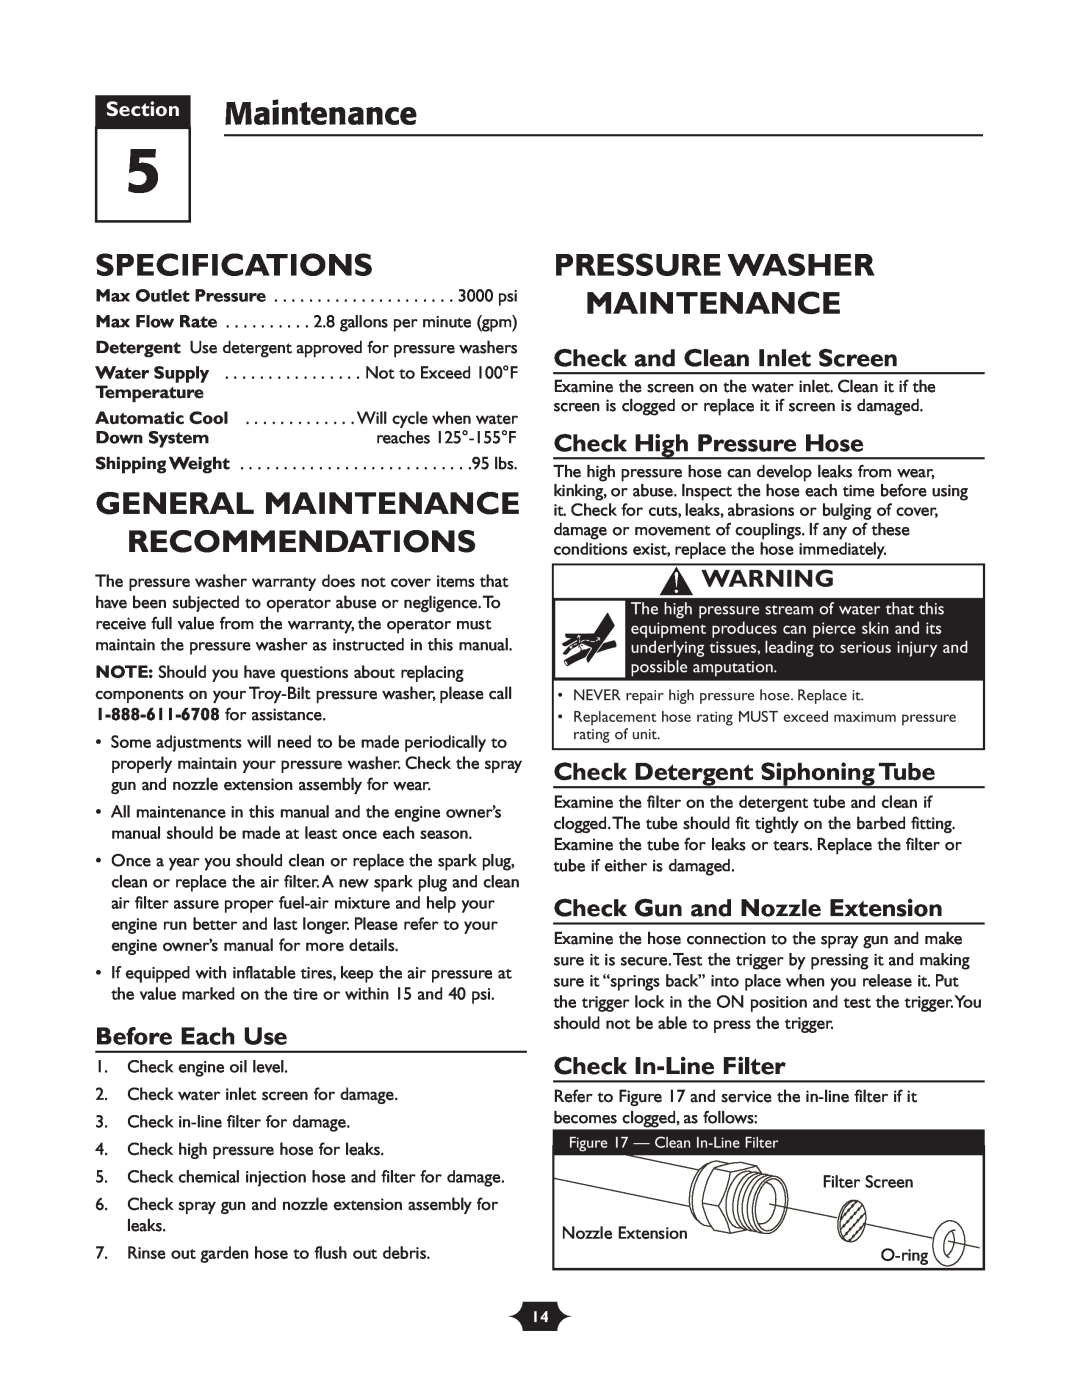 Troy-Bilt 020242-1 Section Maintenance, Specifications, General Maintenance Recommendations, Pressure Washer Maintenance 